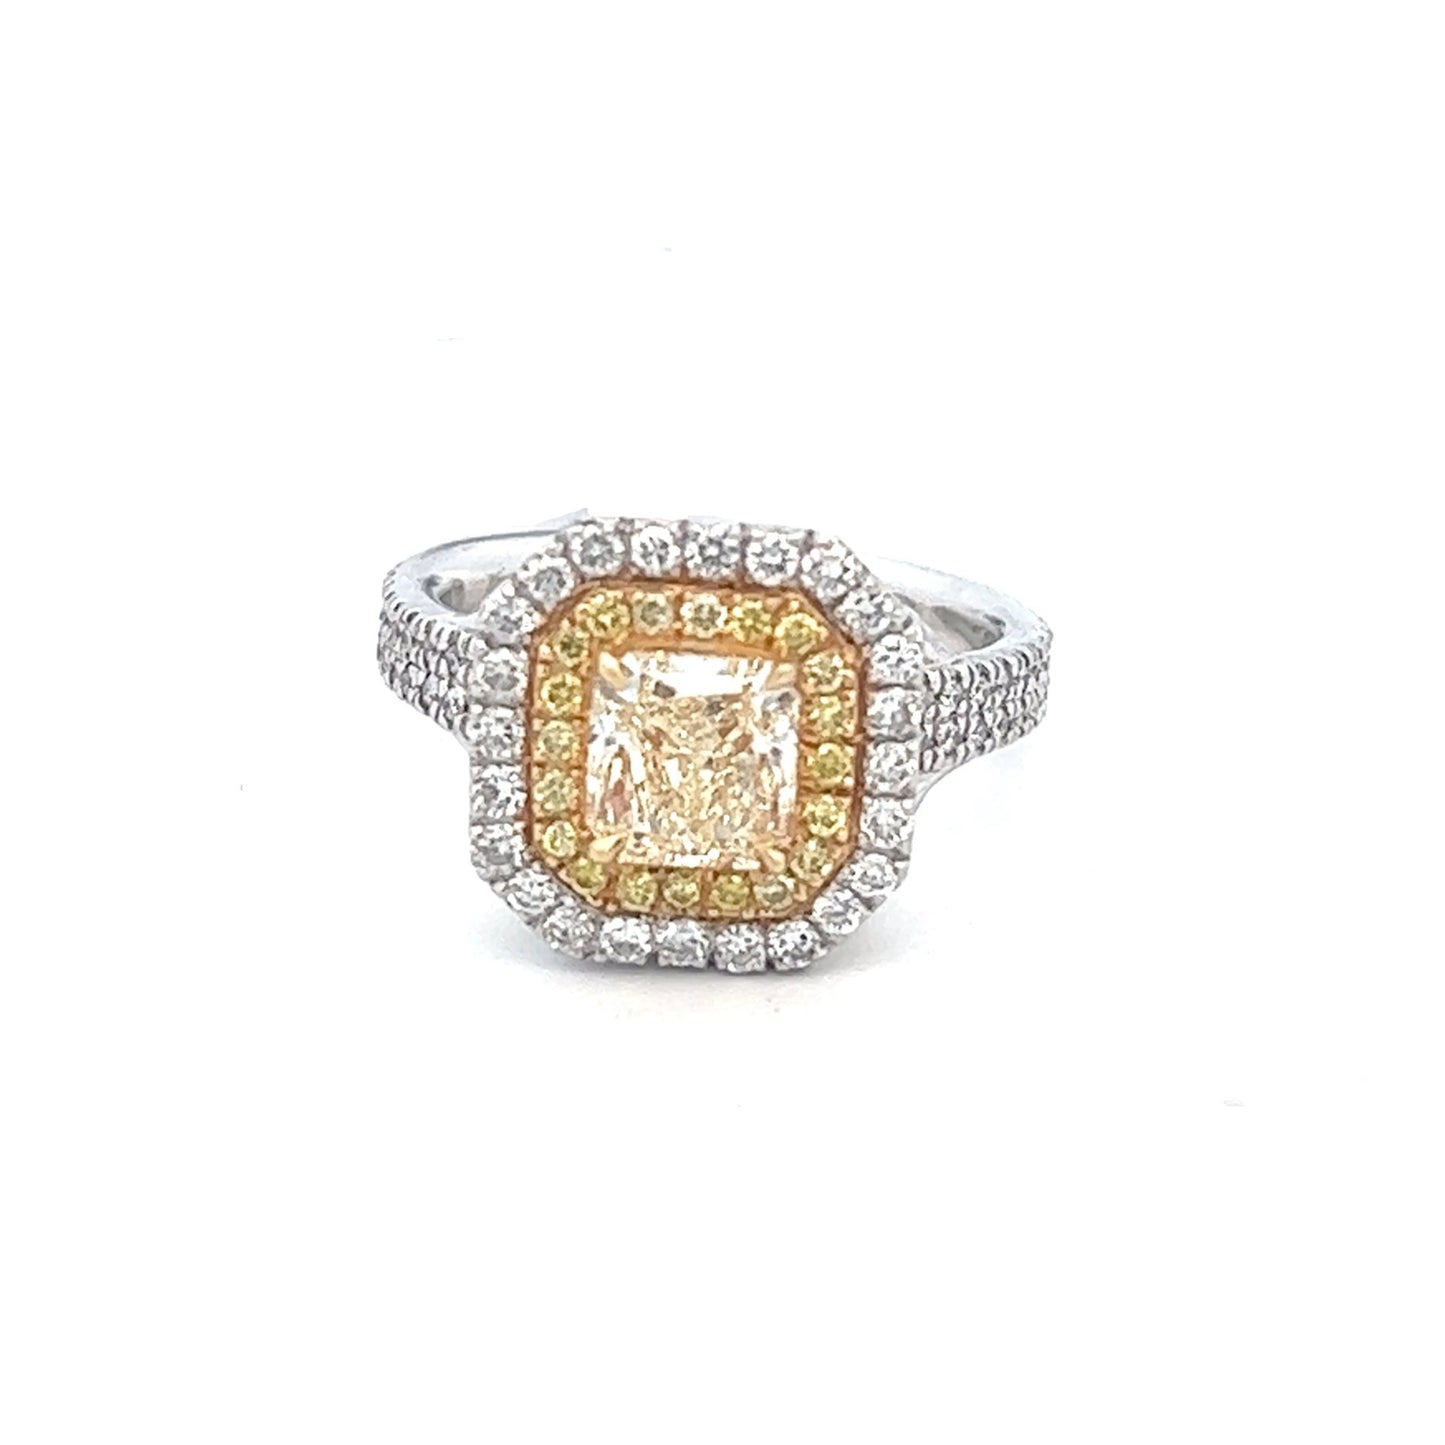 2.58cttw Radiant Cut Yellow Diamond Engagement Ring | 18k White Gold